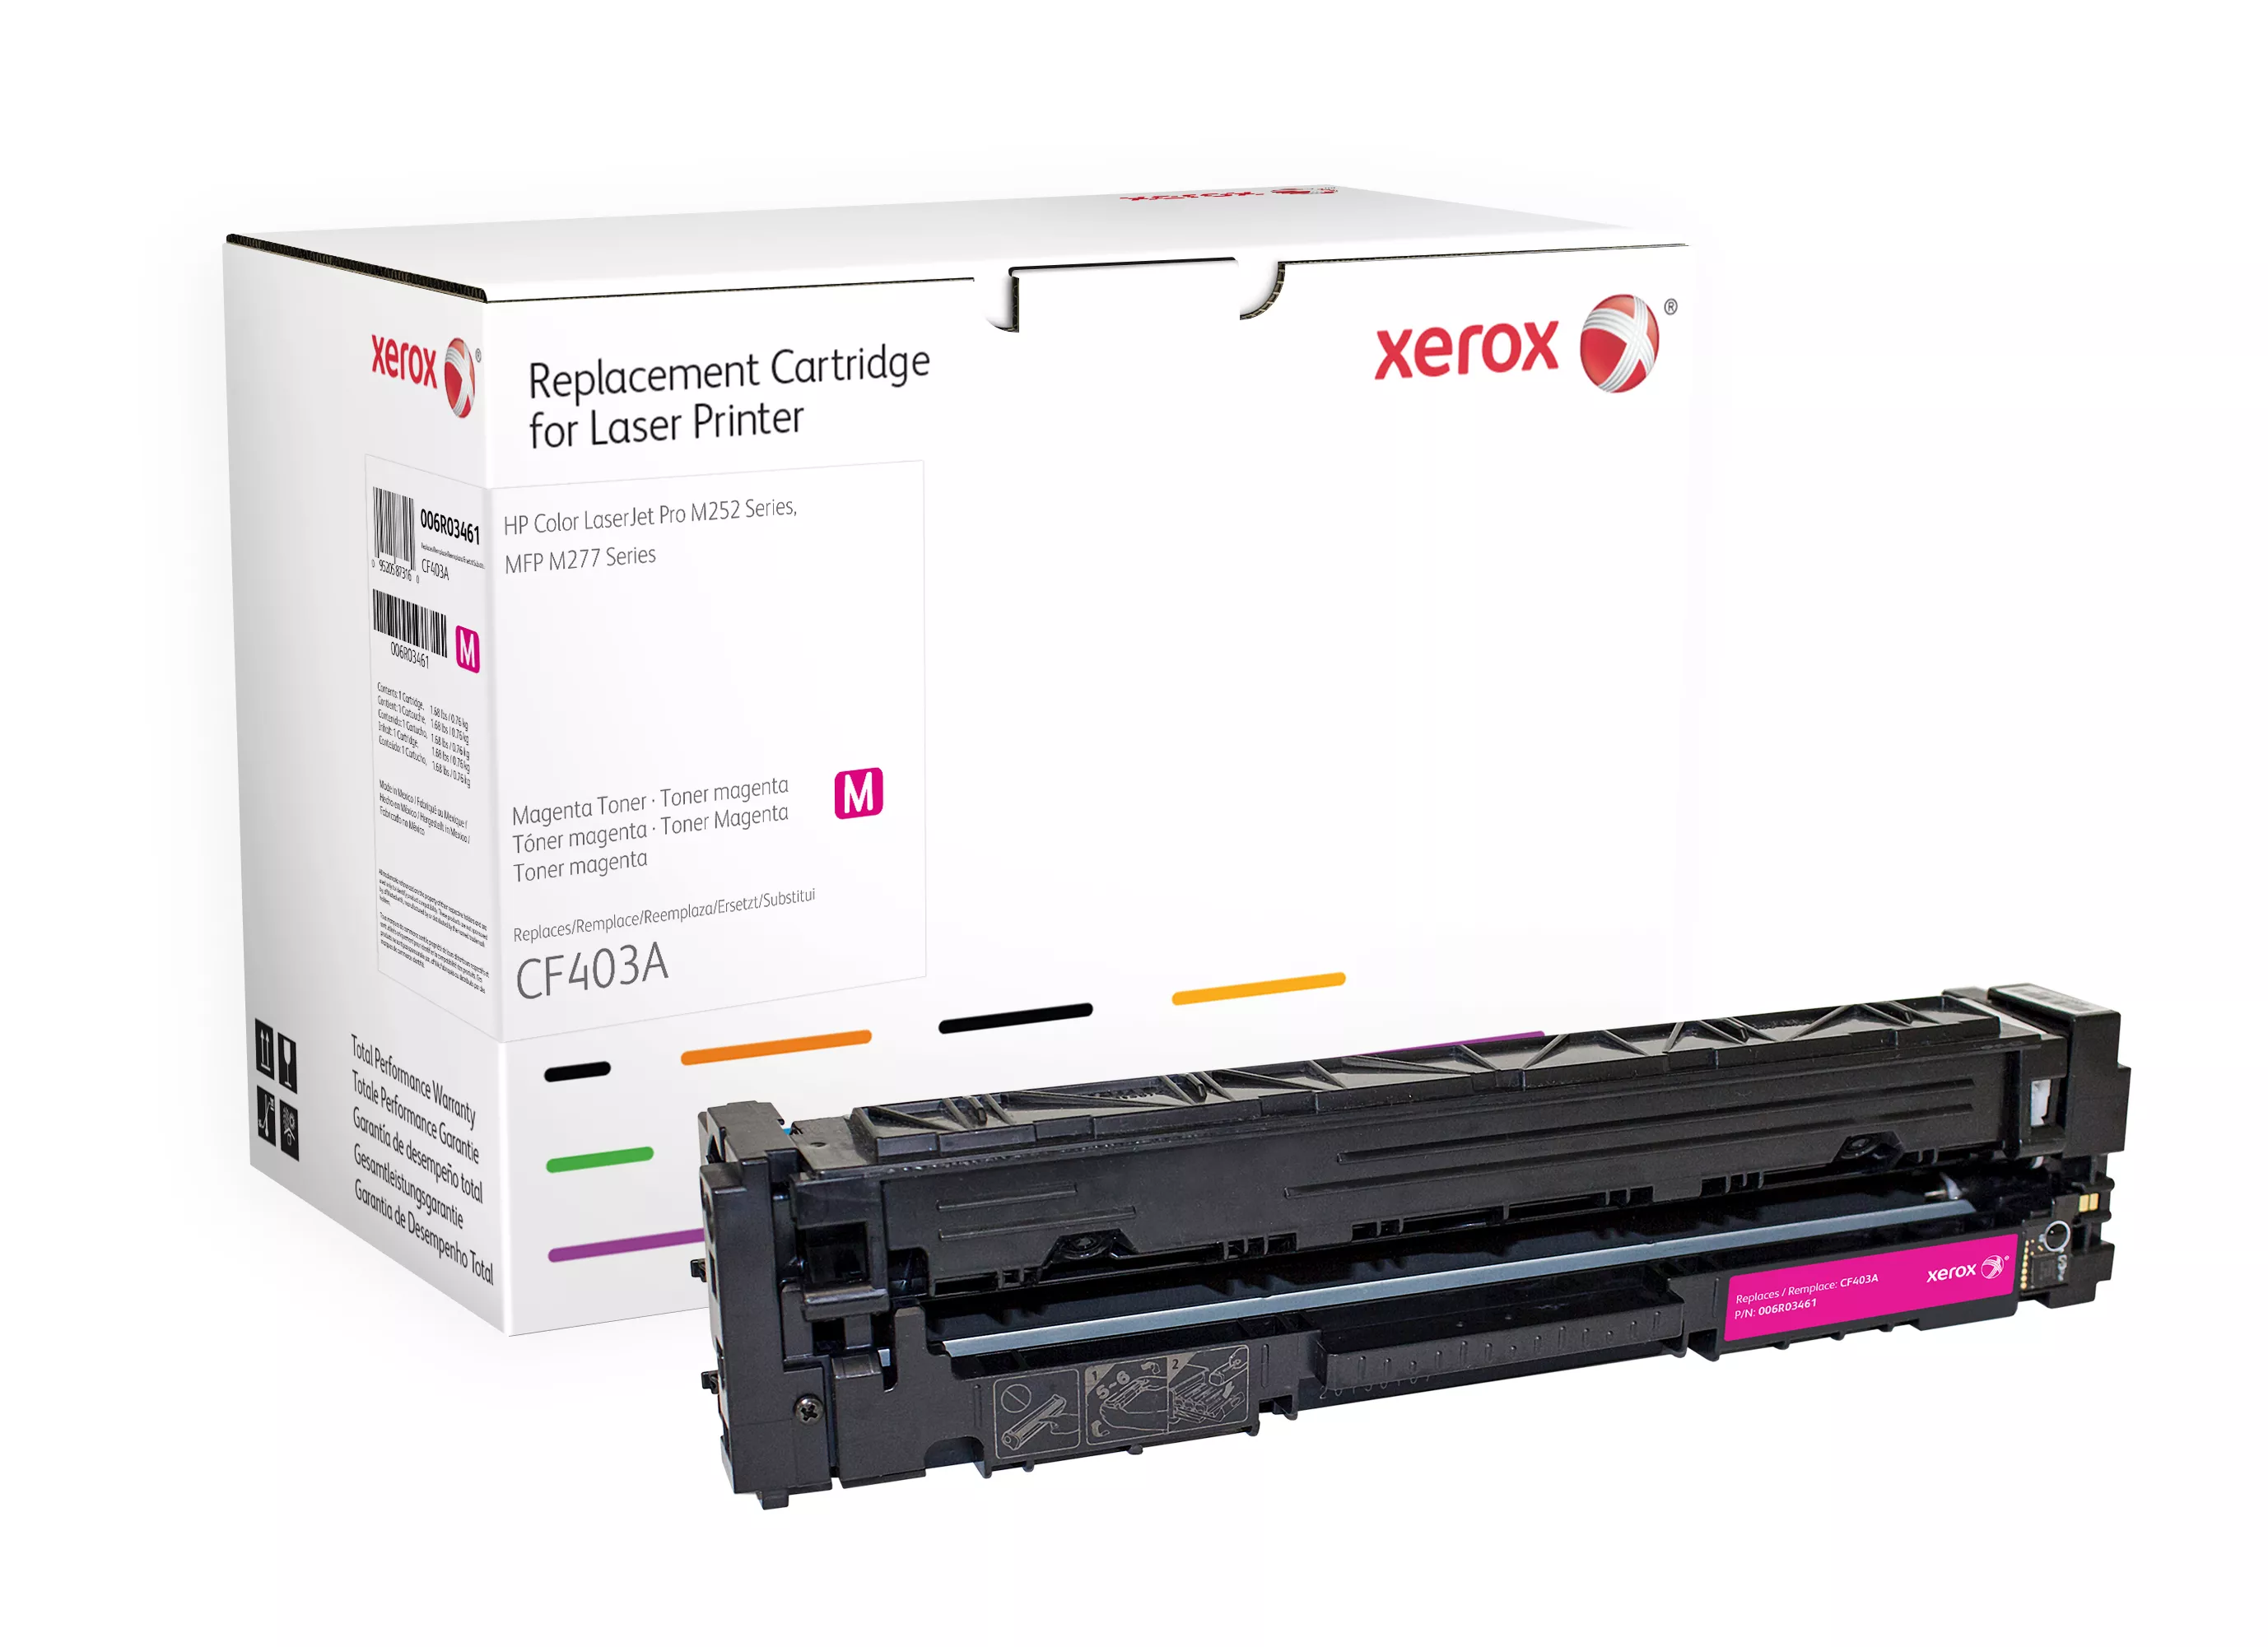 Vente XEROX XRC Toner CF403A magenta equivalent to HP 201A au meilleur prix